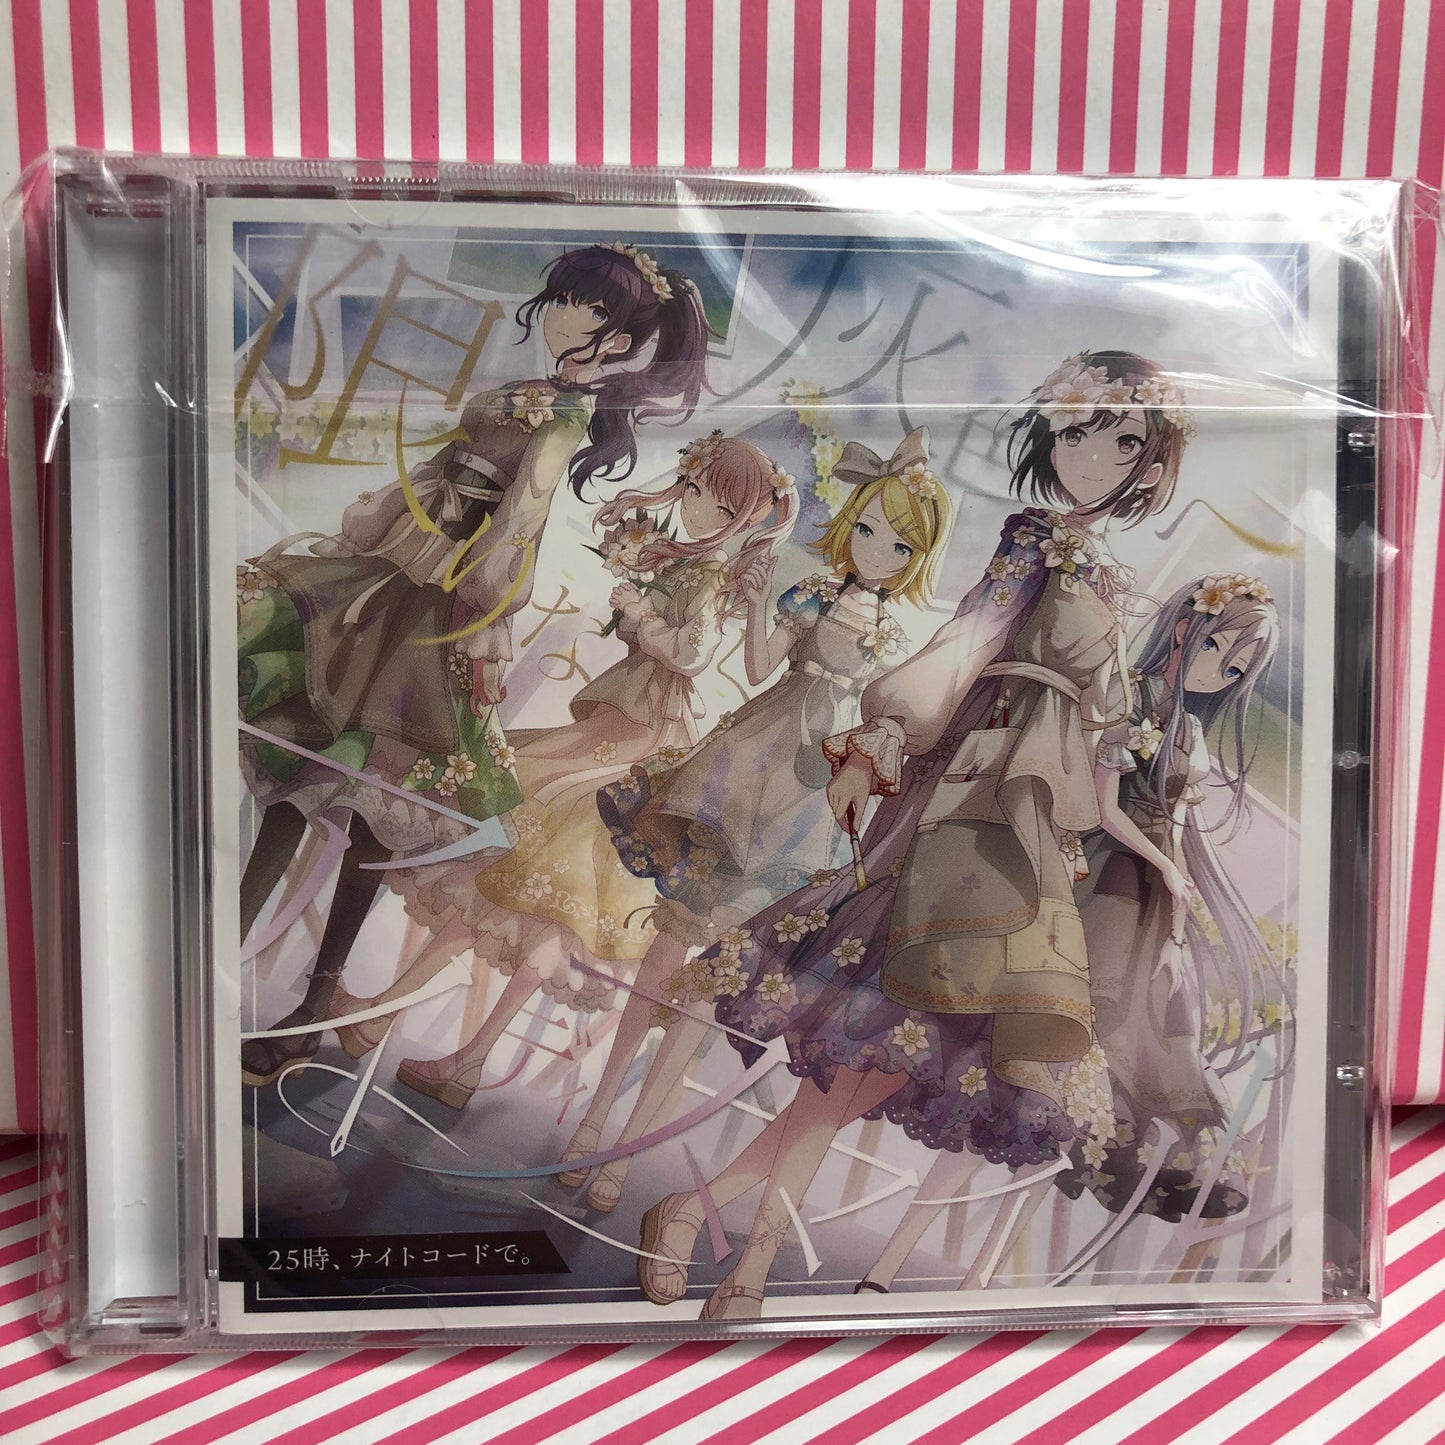 Nightcord à 25h00 - Kagirinaku haiiro he / Idsmile 2ème single CD du projet Sekai Colorful Stage ! pi. Hatsune Miku